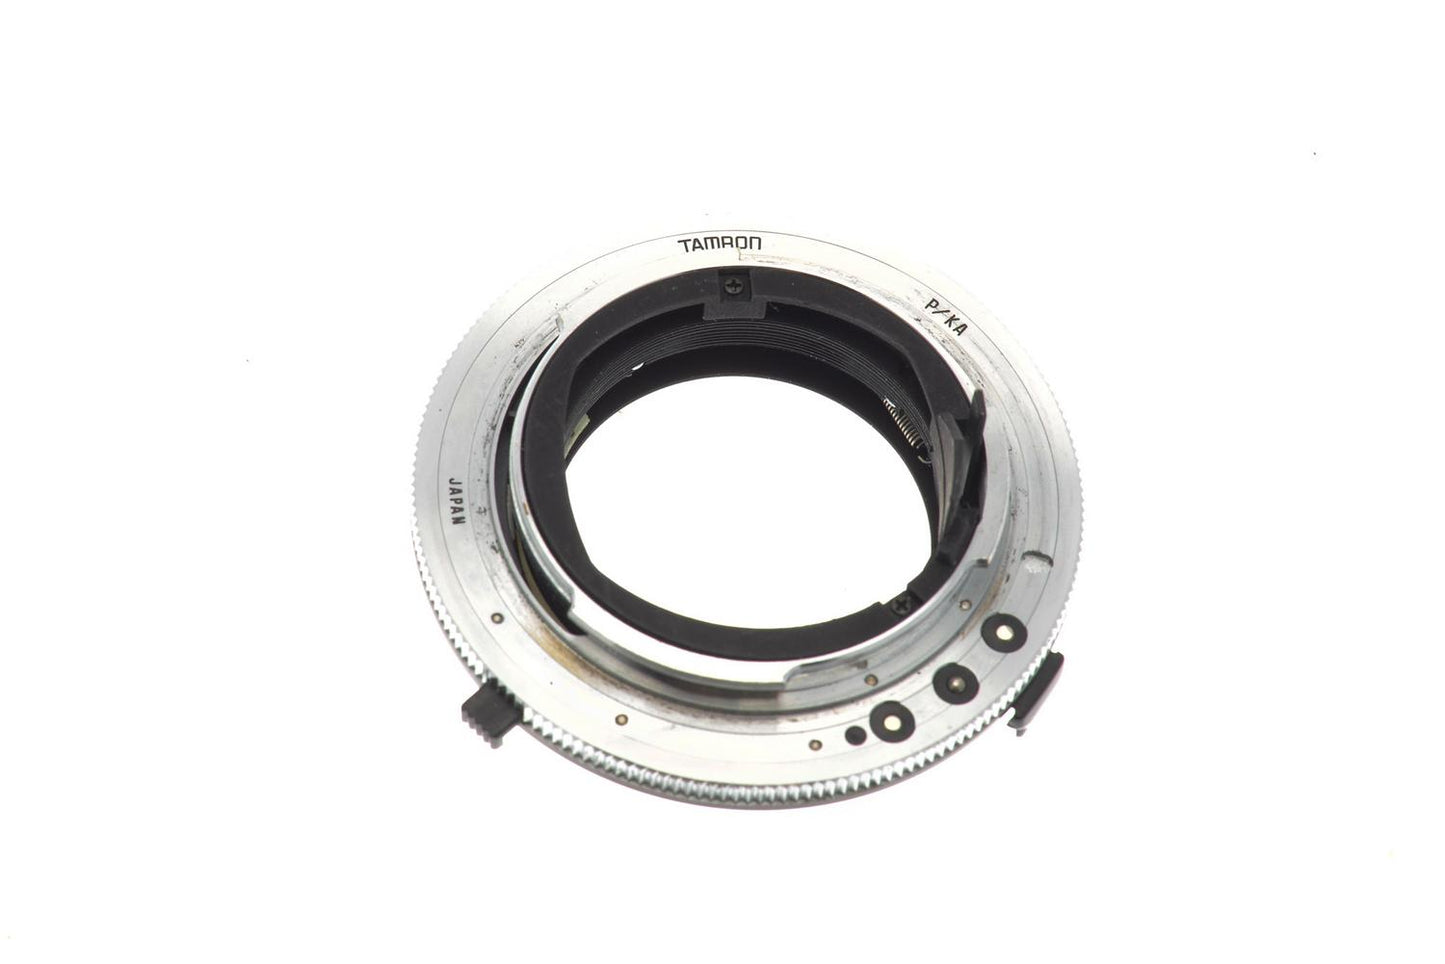 Tamron Adaptall 2 - Pentax K/A - Lens Adapter